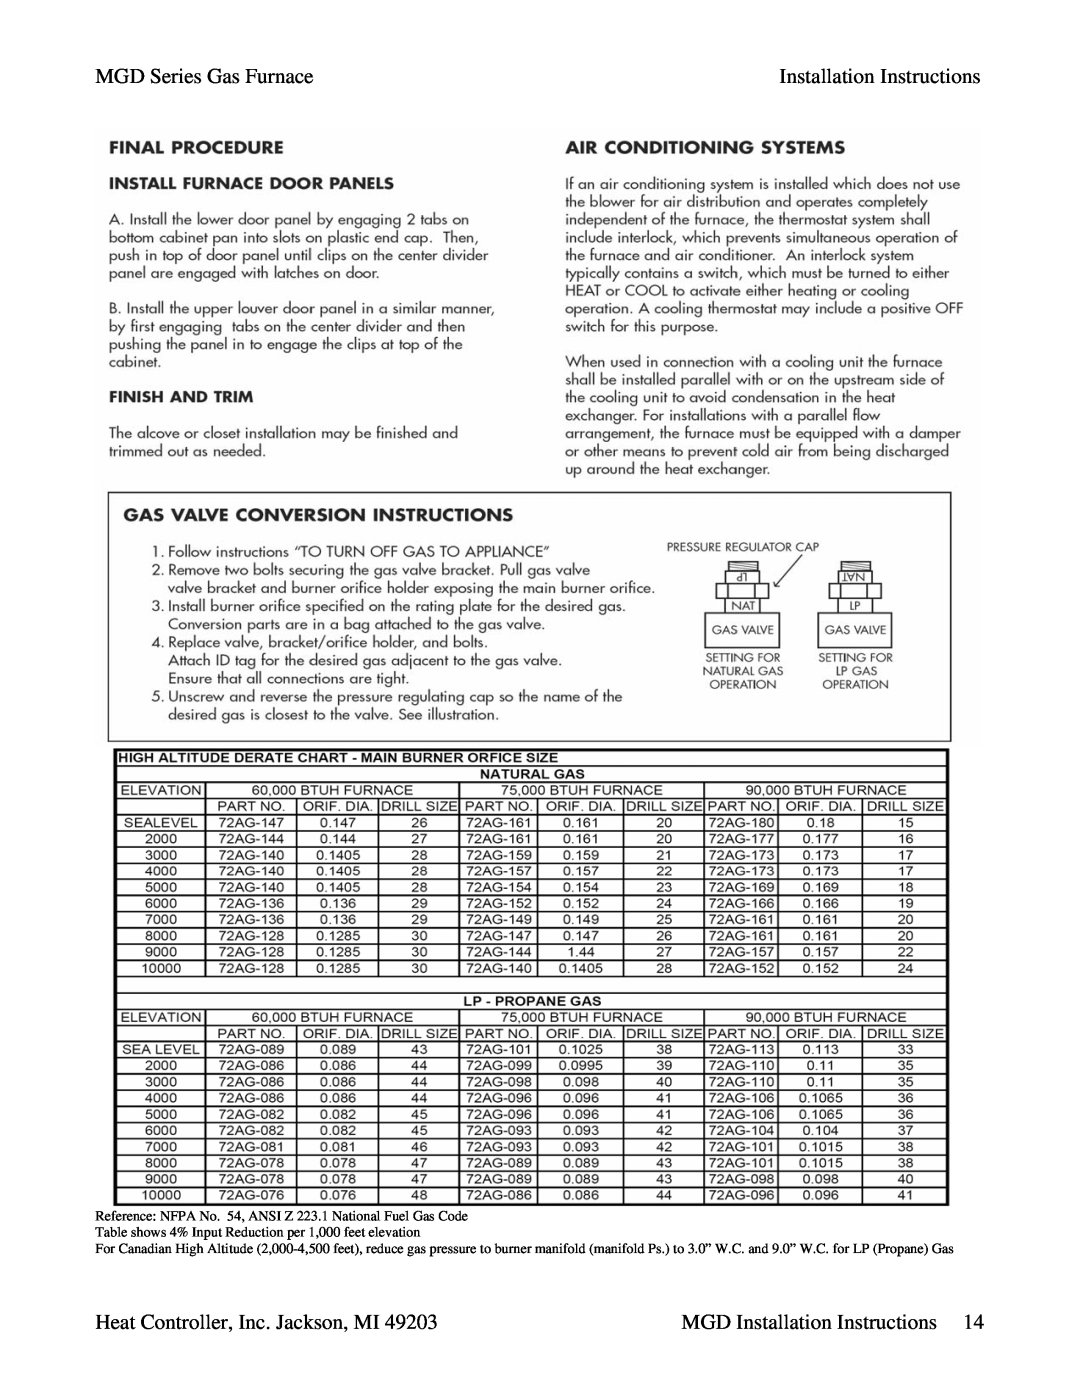 Heat Controller MGD75-E5A, MGD90-E5A MGD Series Gas Furnace, Installation Instructions, Heat Controller, Inc. Jackson, MI 